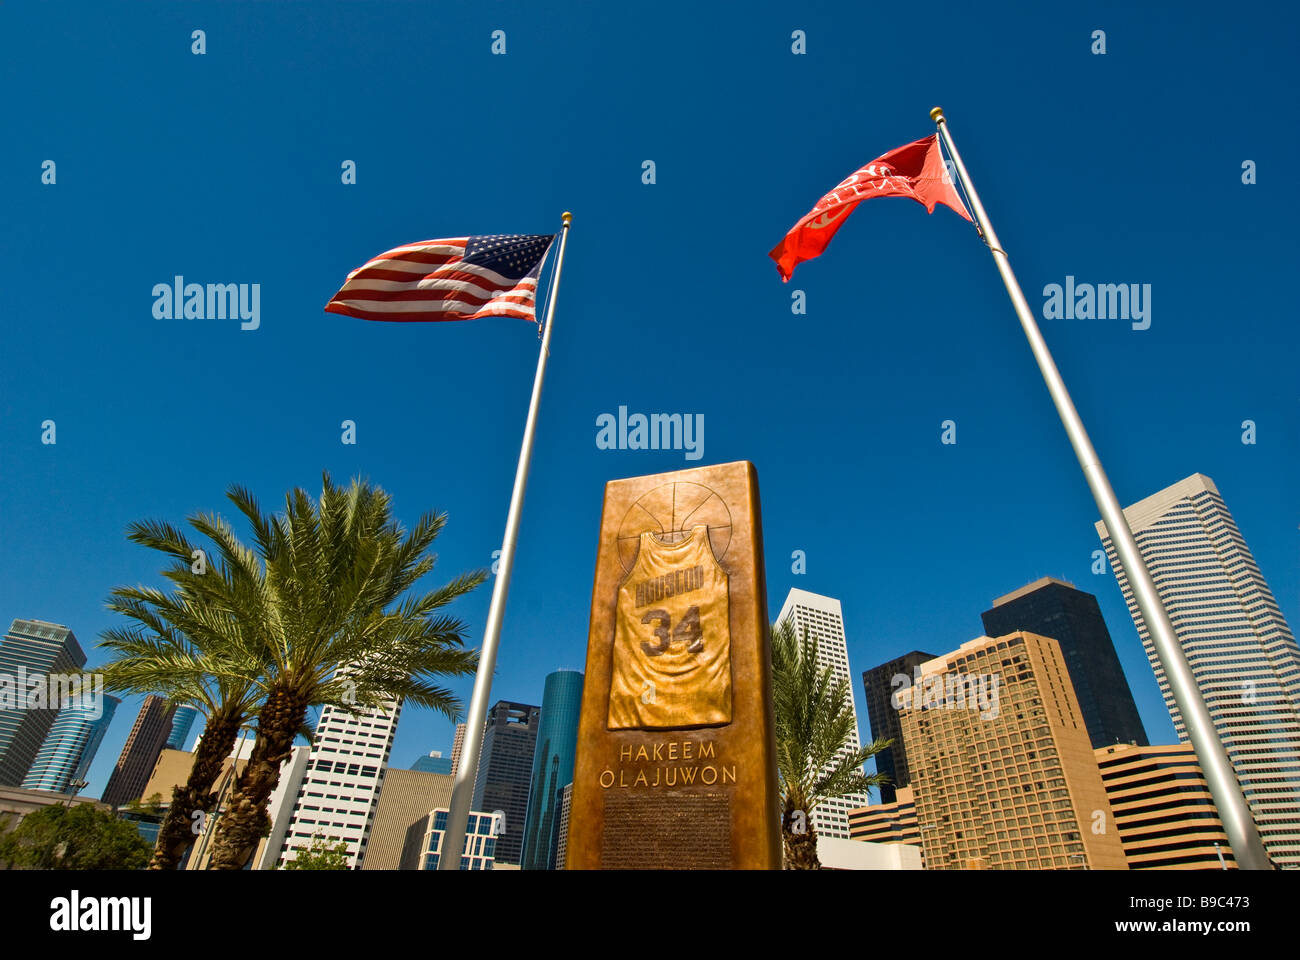 Hakeem Olajuwon Houston Texas astros NBA basketball player bronze monument two american flags  city landmark at Toyota Center Stock Photo